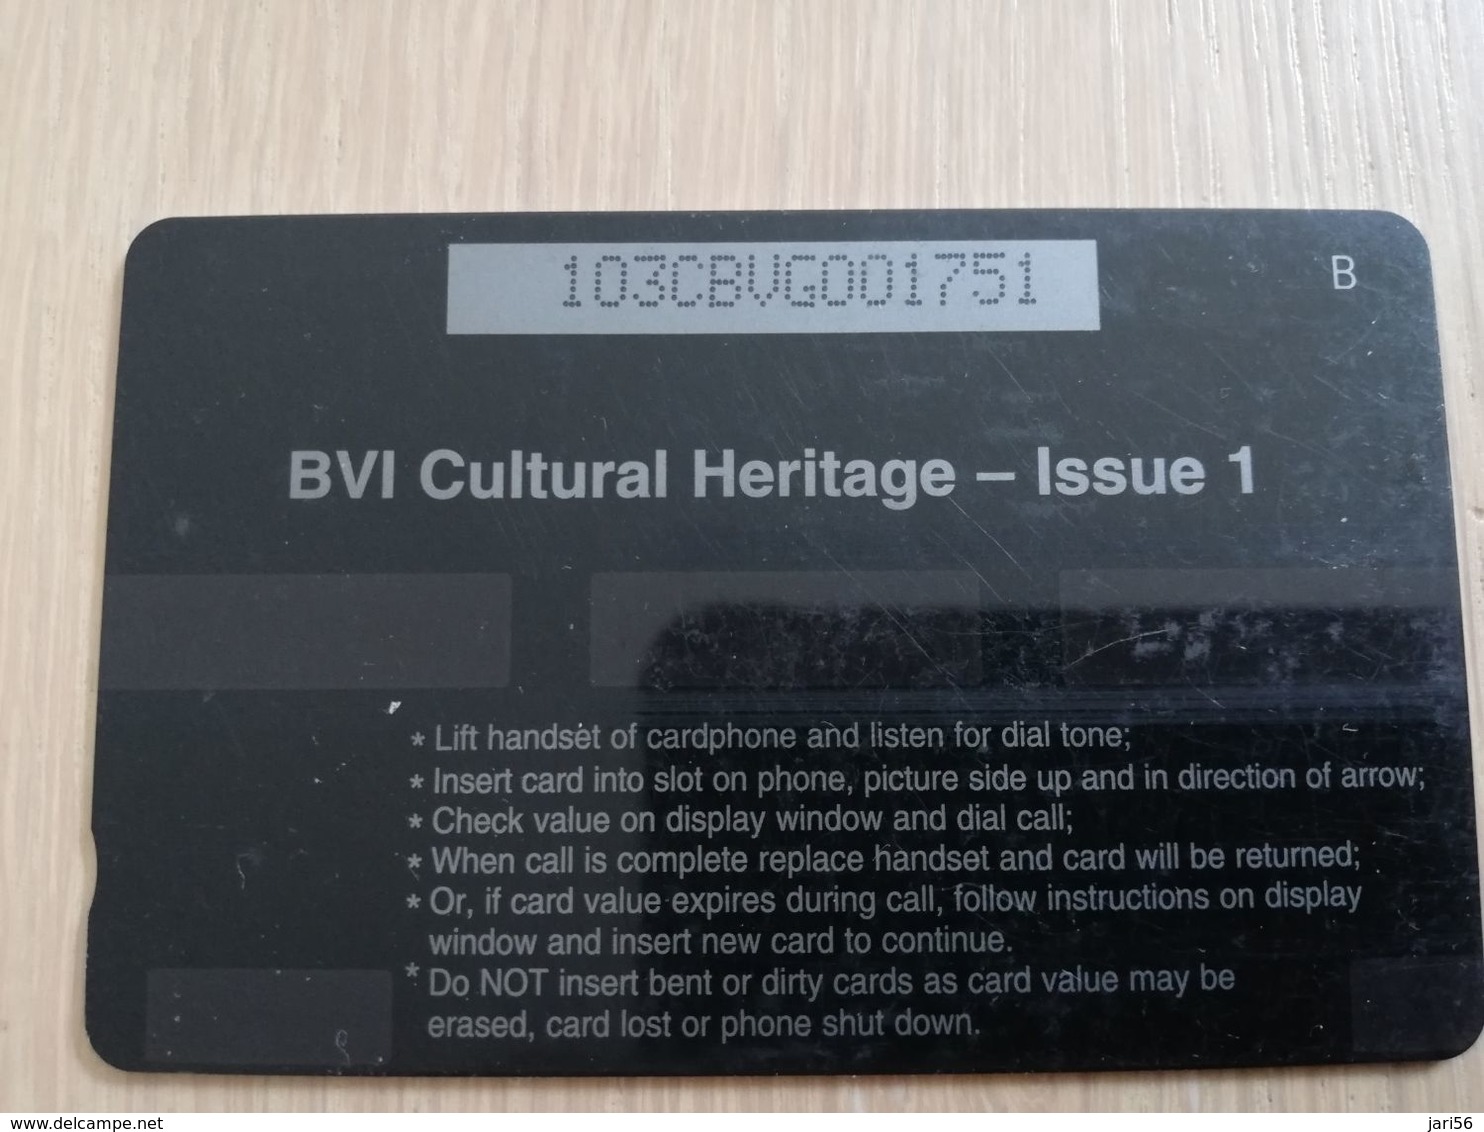 BRITSCH VIRGIN ISLANDS  US$ 20  BVI-103G   HERITAGE DANCERS       103CBVG     Fine Used Card   ** 2671** - Jungferninseln (Virgin I.)